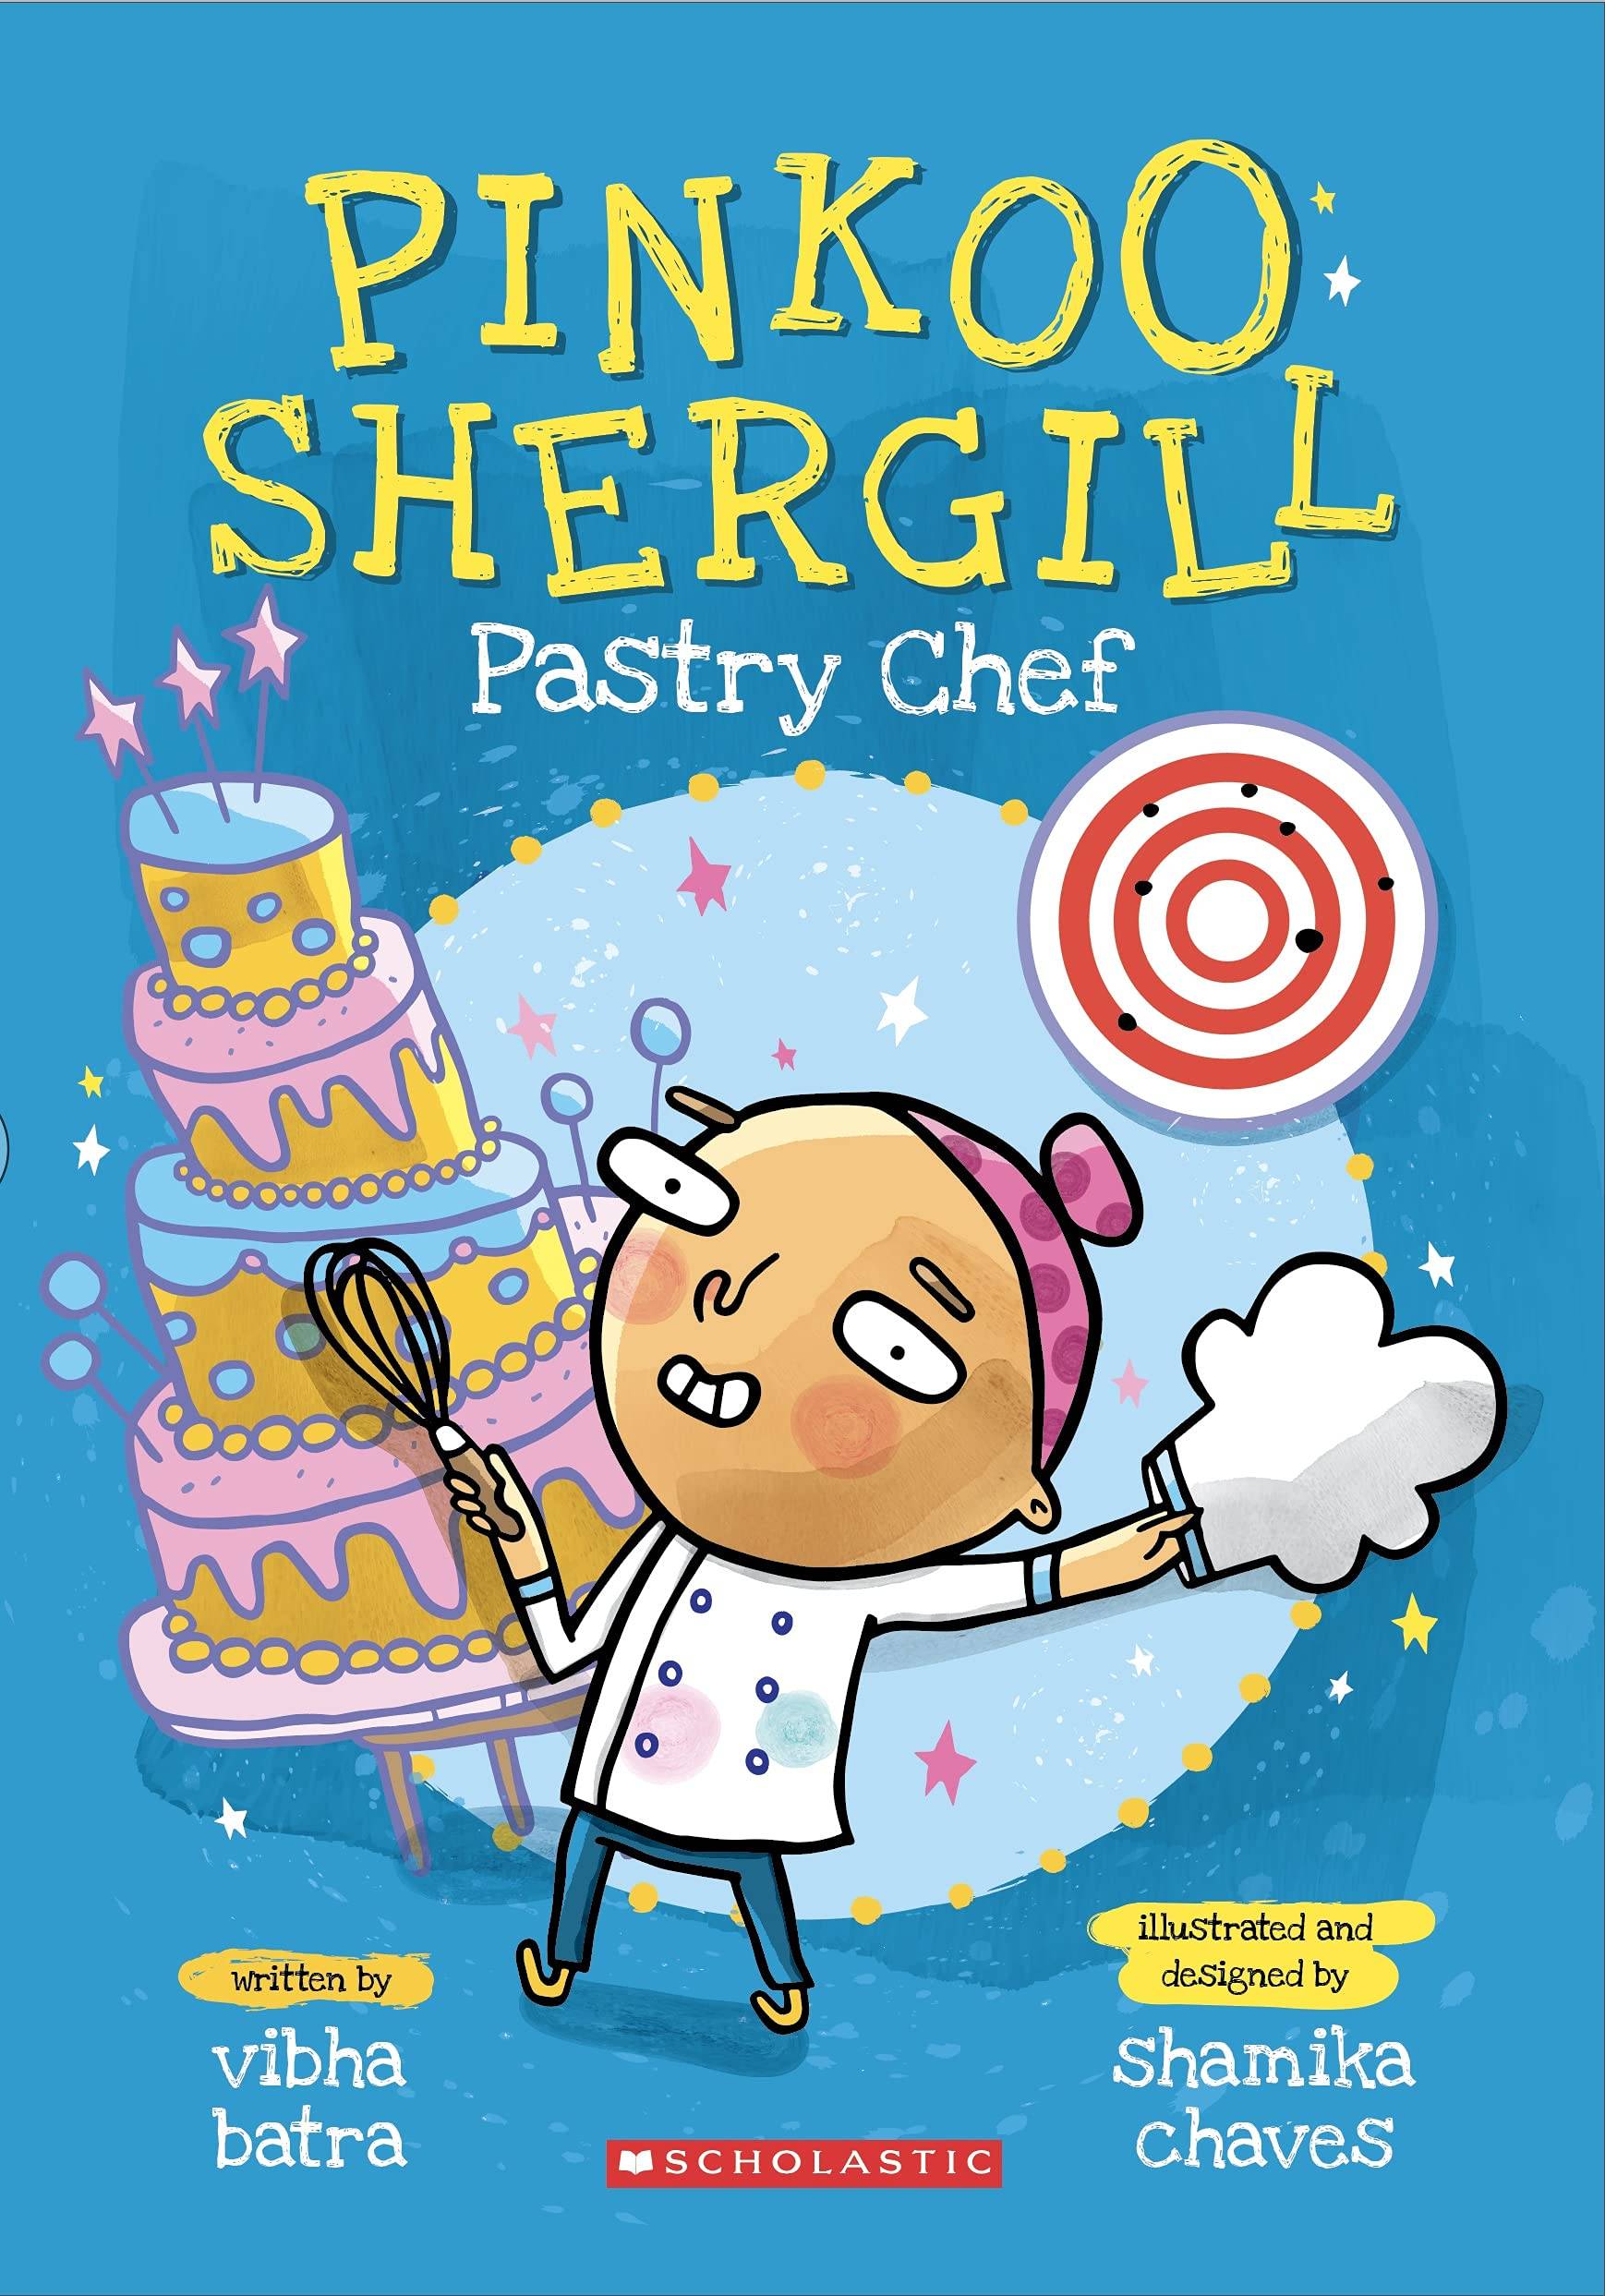 IMG : Pinkoo Shergill Pastry Chef